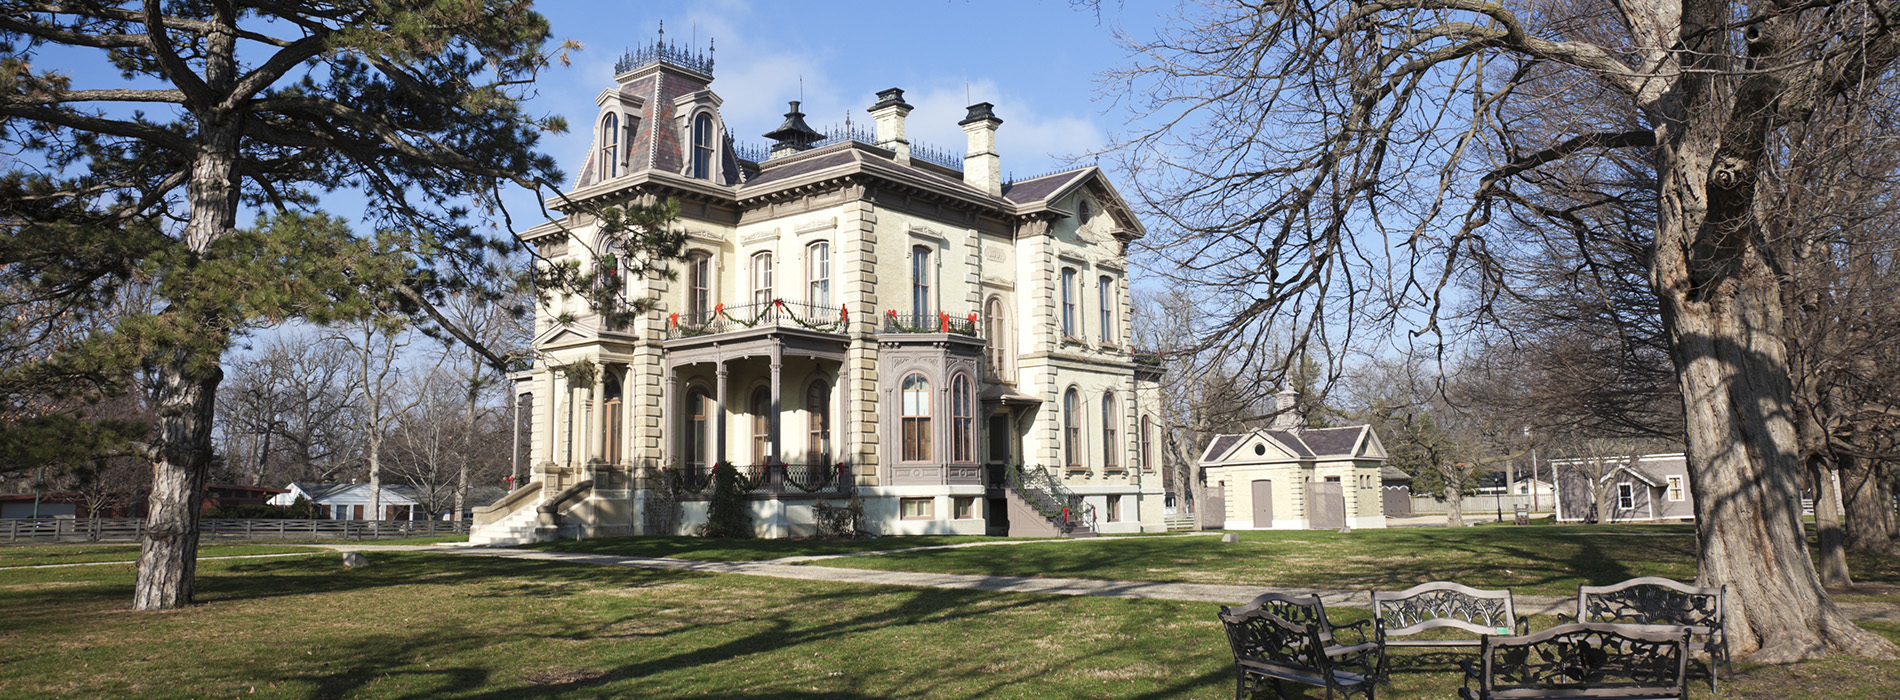 David Davis Historic Mansion in Bloomington, IL